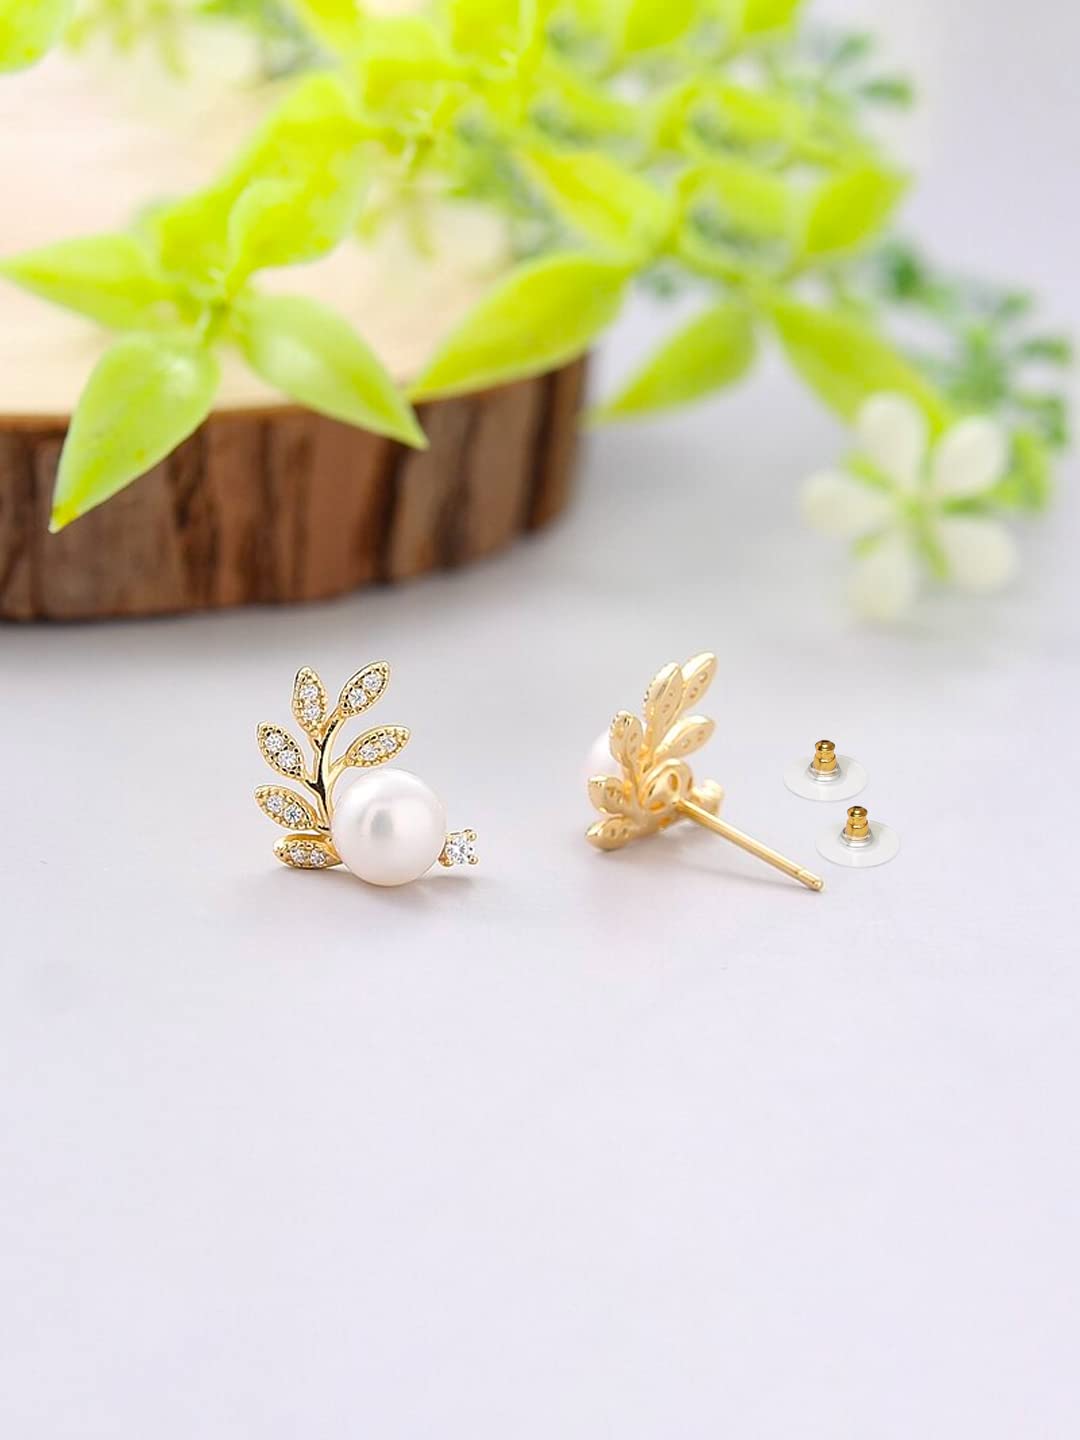 Women gold earrings stock photo. Image of jewelry, black - 188246252